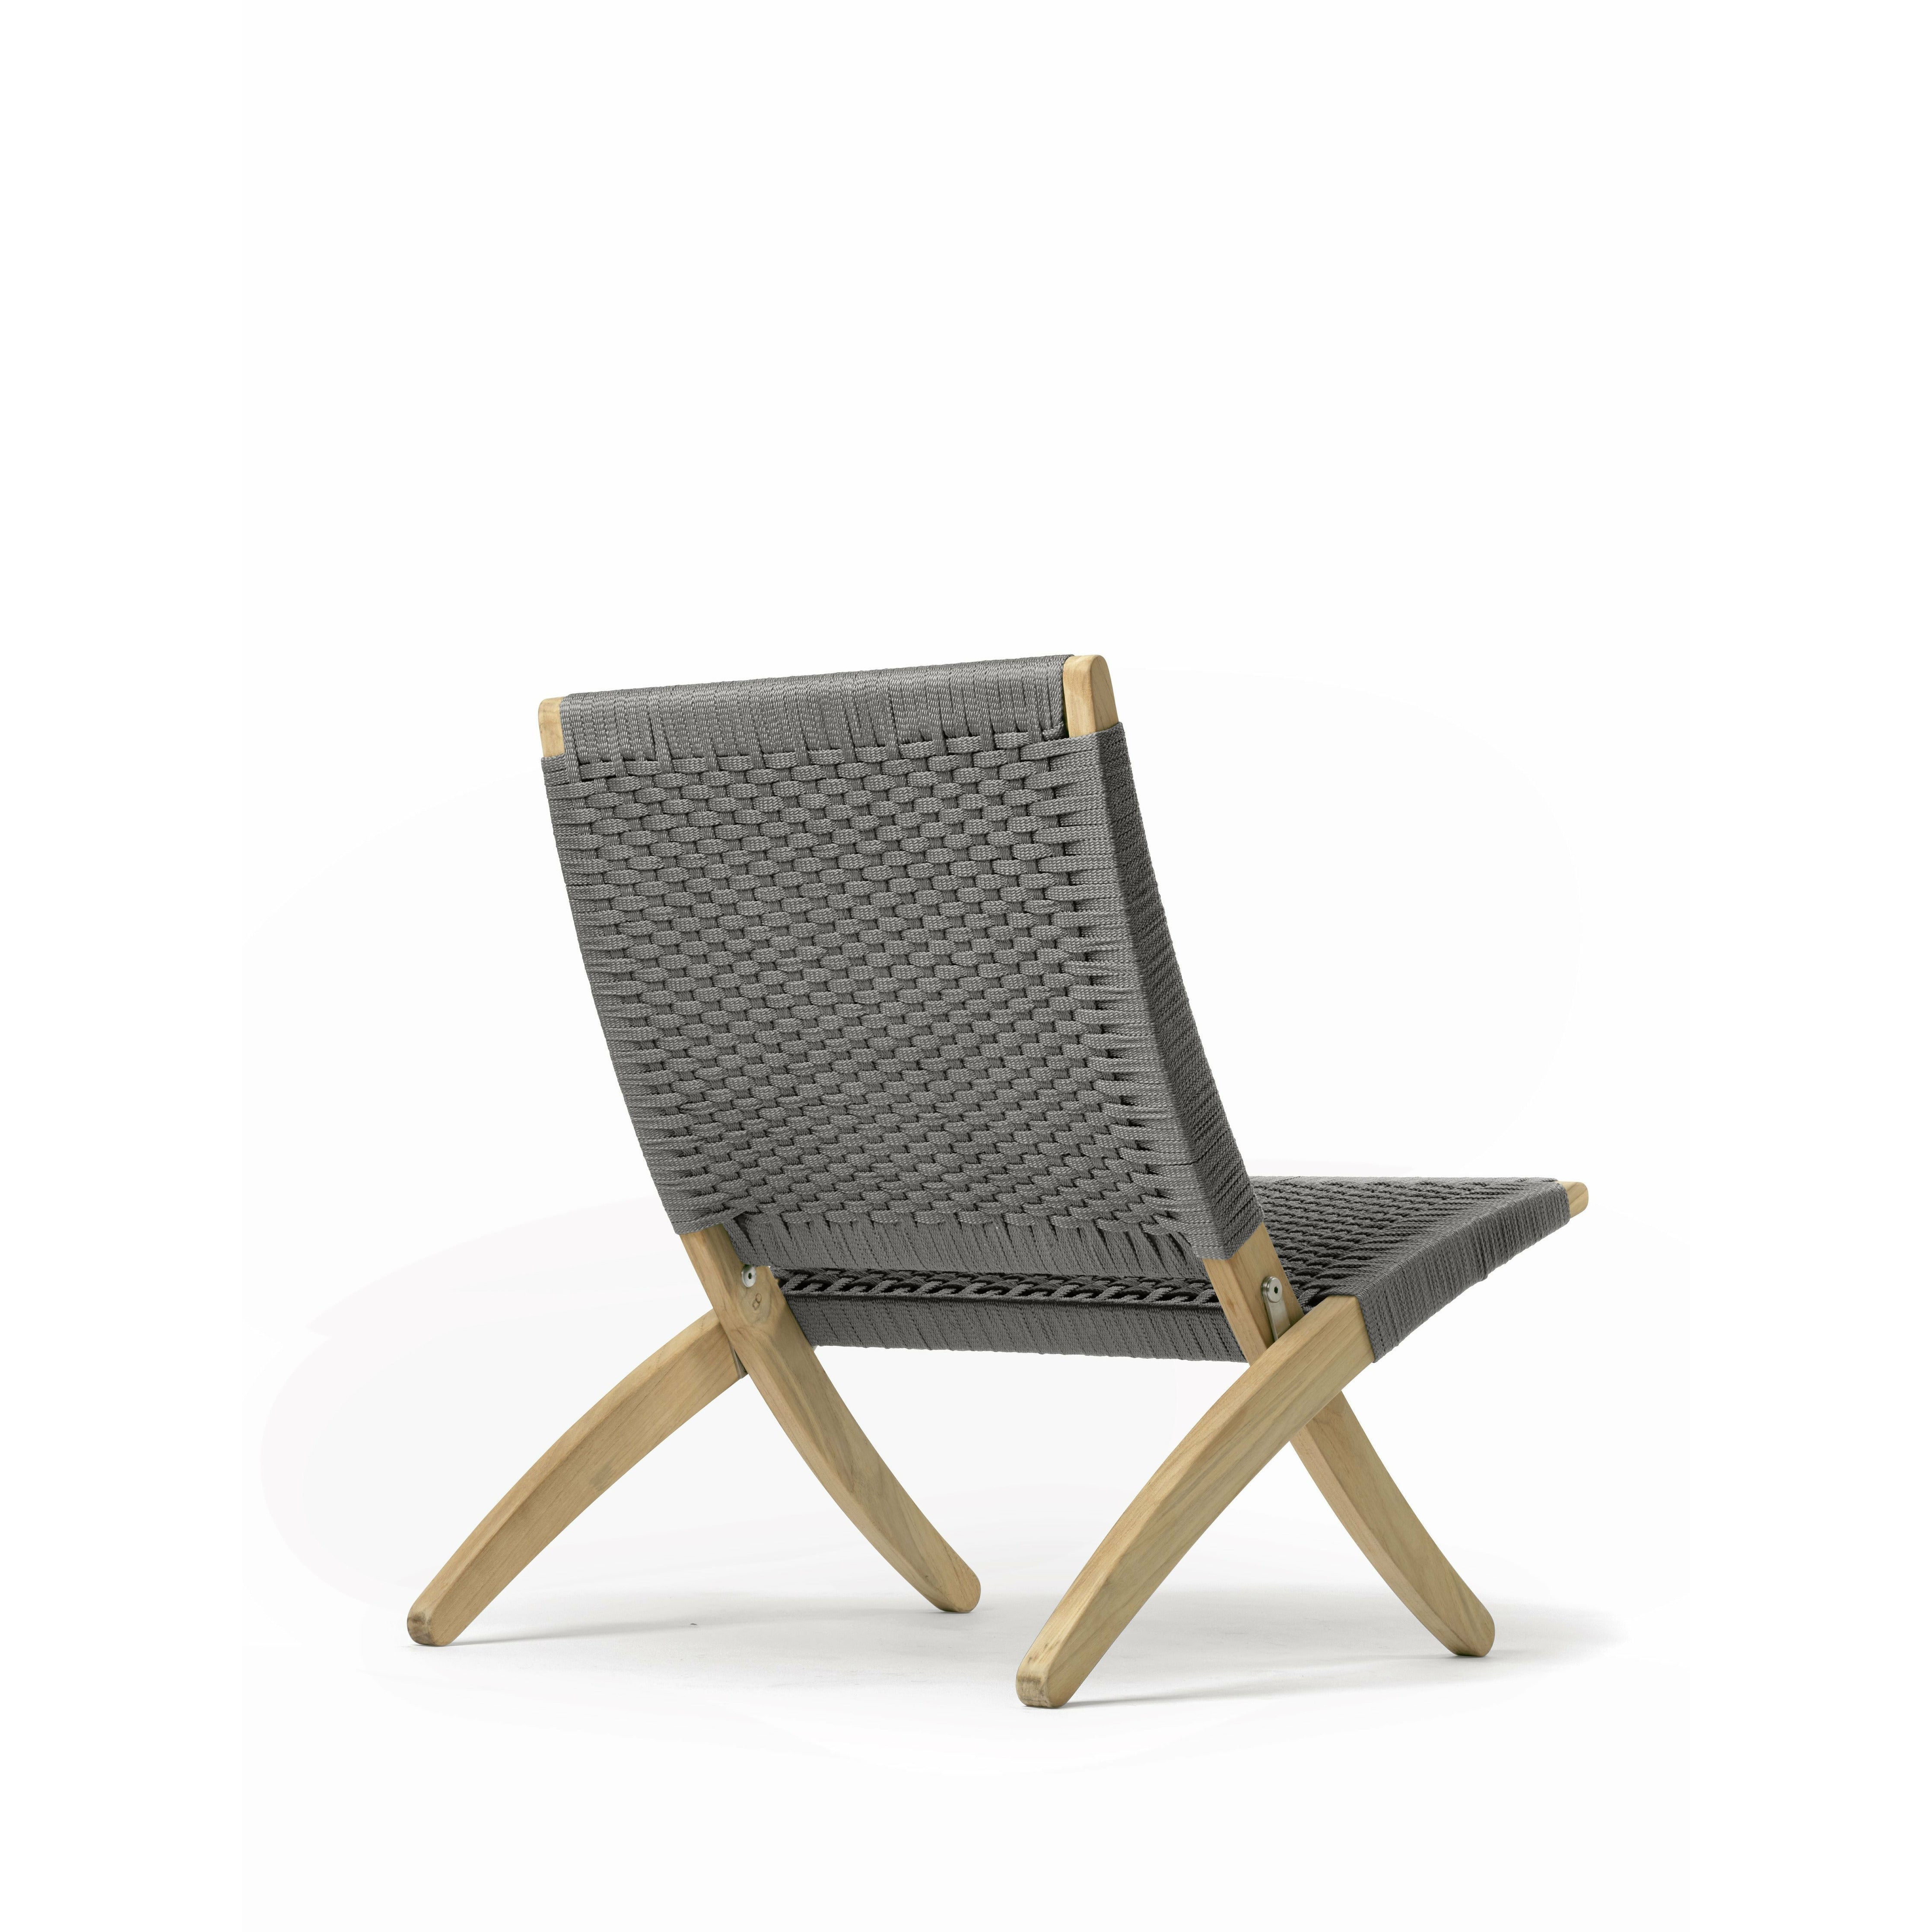 Carl Hansen MG501 Cuba Chair Outdoor neoléčený teak, lano/c Harcoal